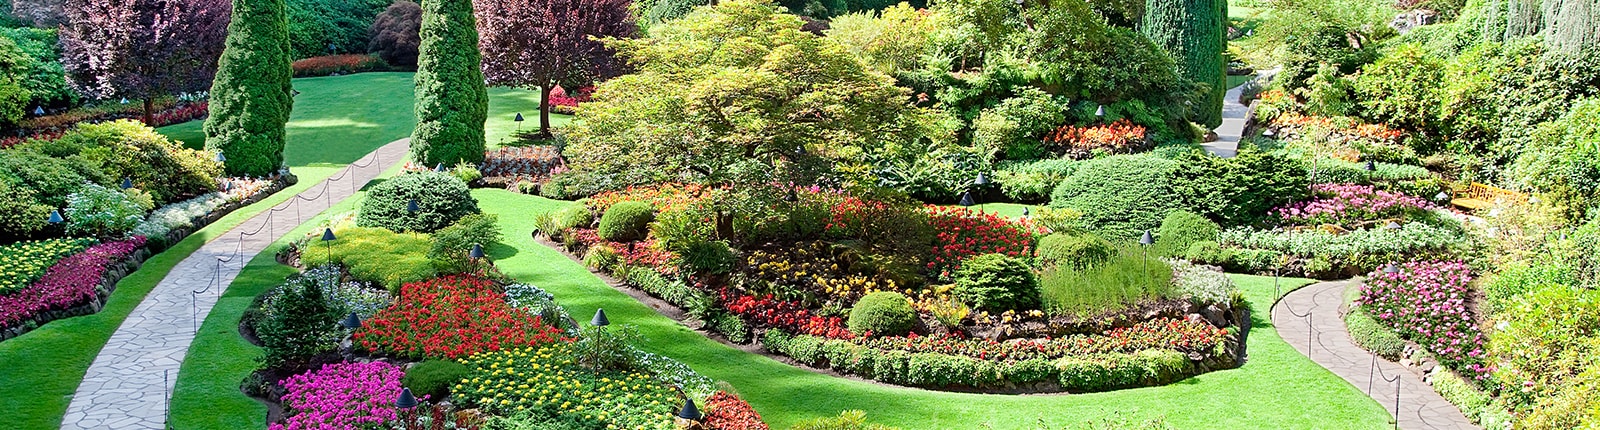 Manicured gardens in Victoria British Columbia